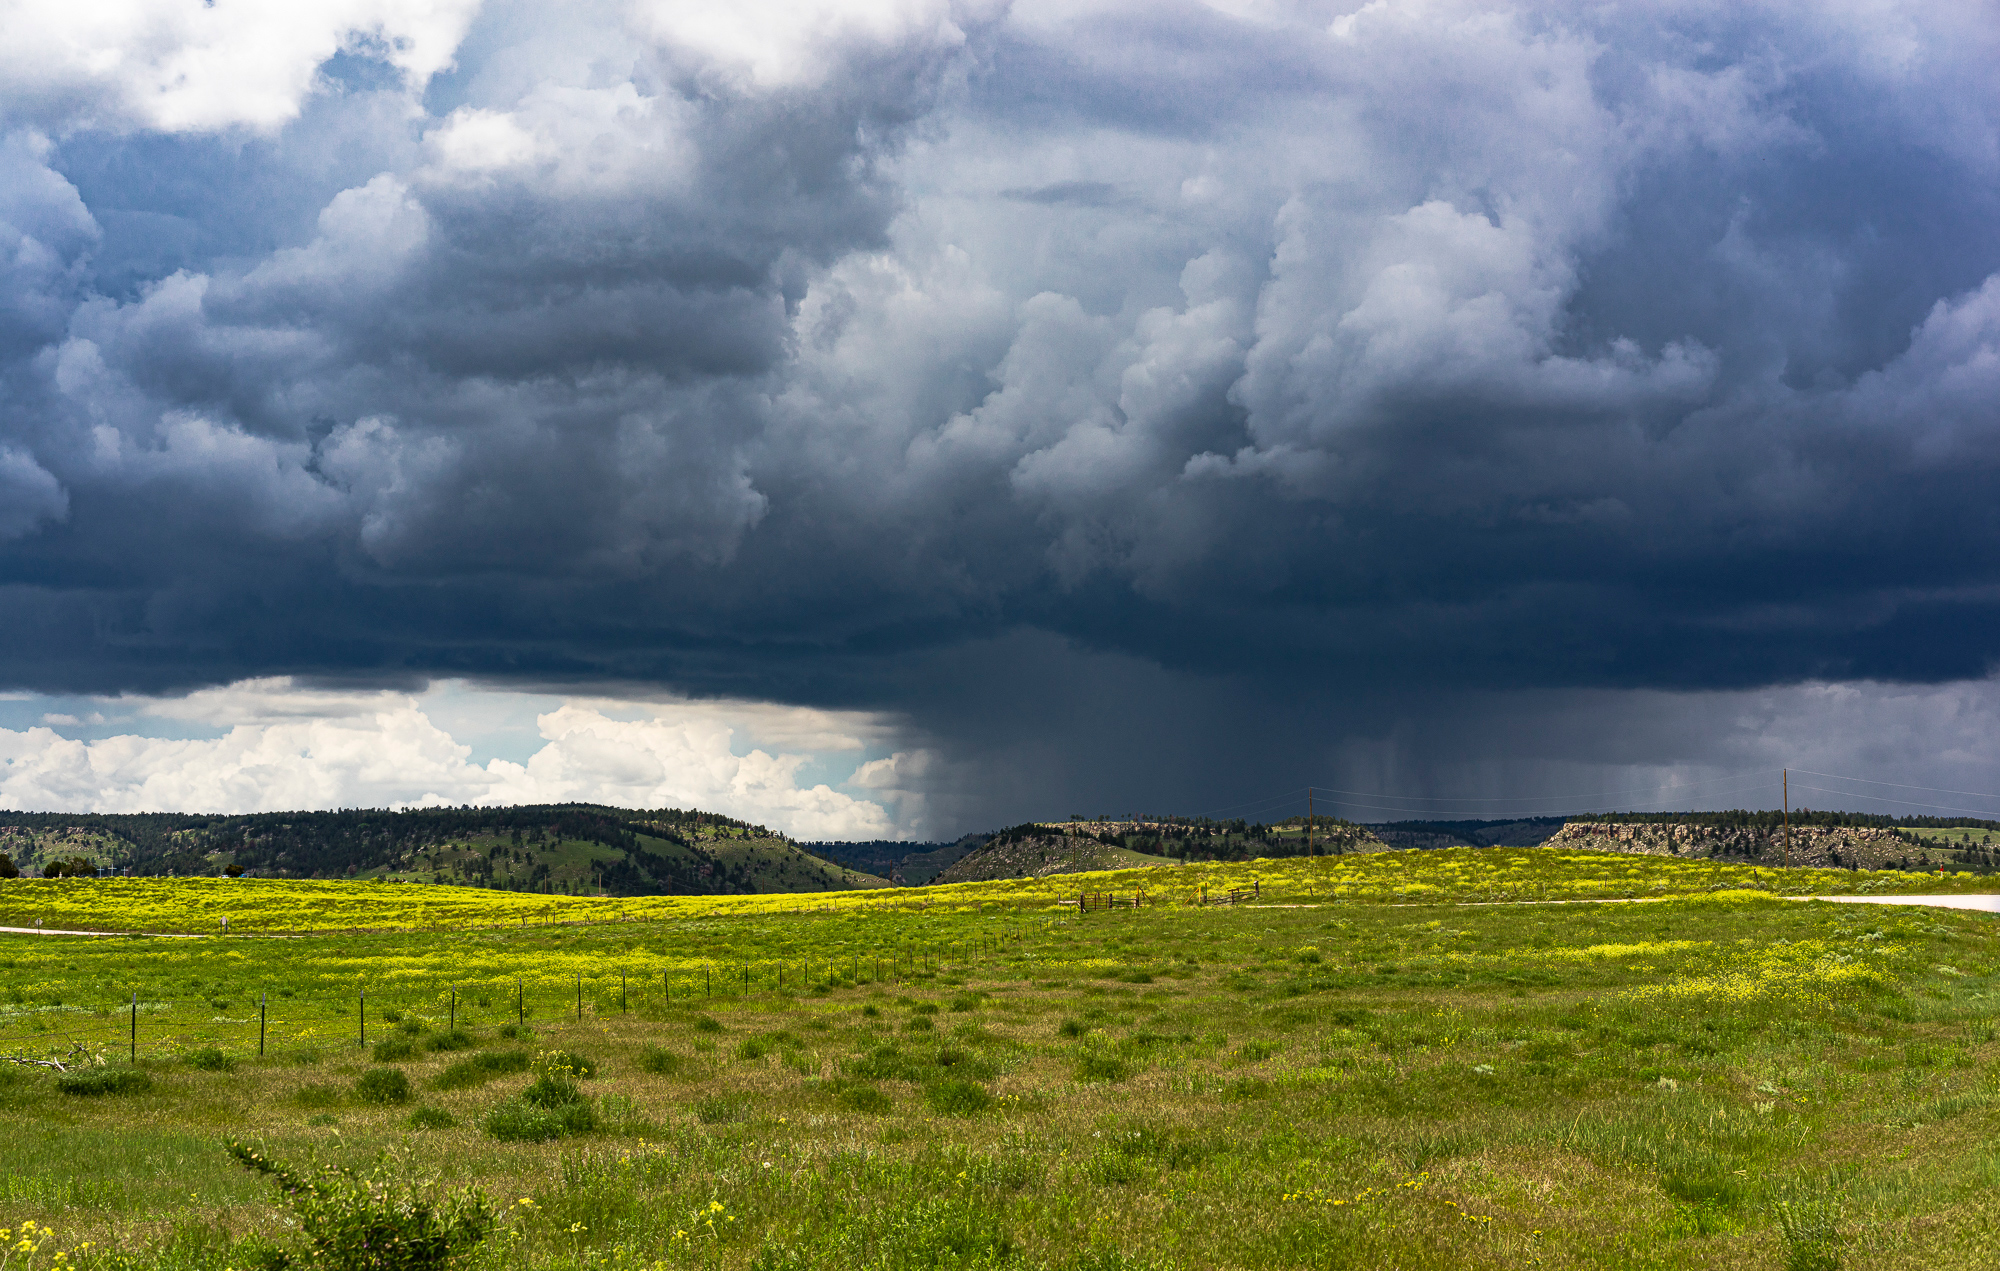 “Approaching Thunderstorm”, 2014, Black Hills, SD